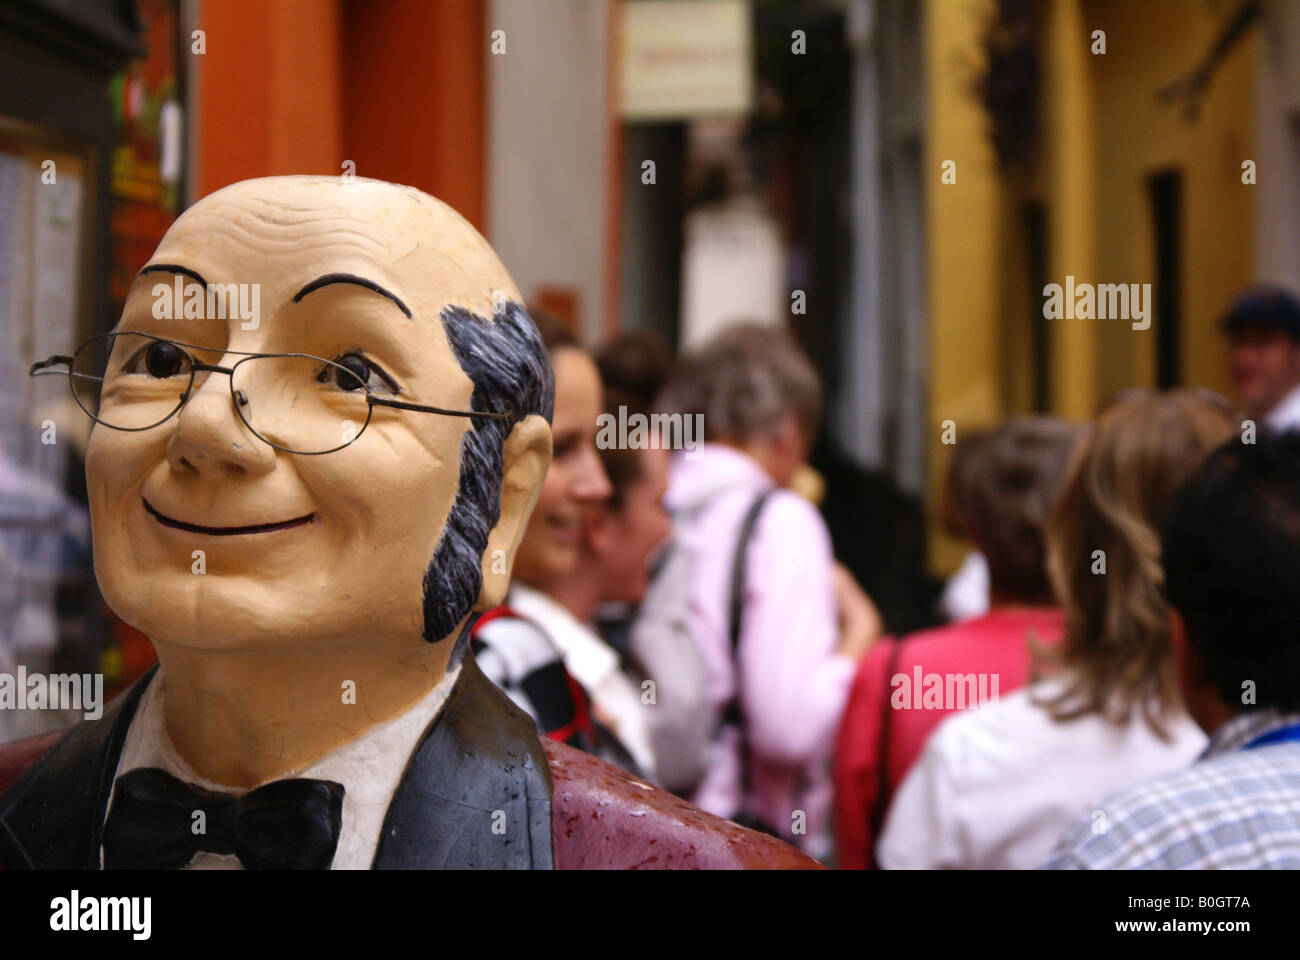 waiter dummy outside spanish restaurant Stock Photo